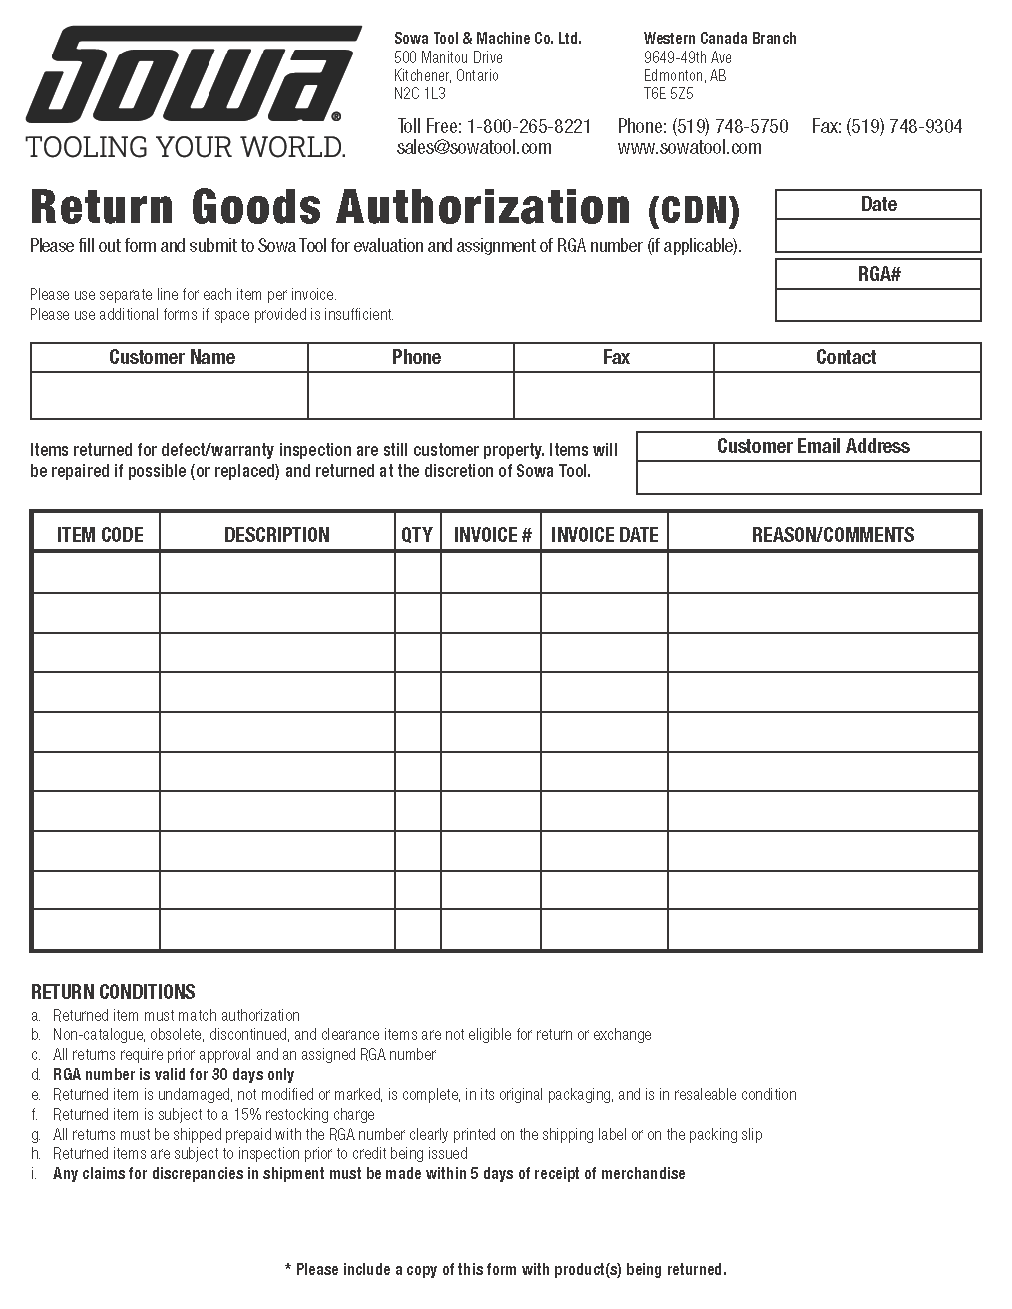 Return Goods Form (RGA)